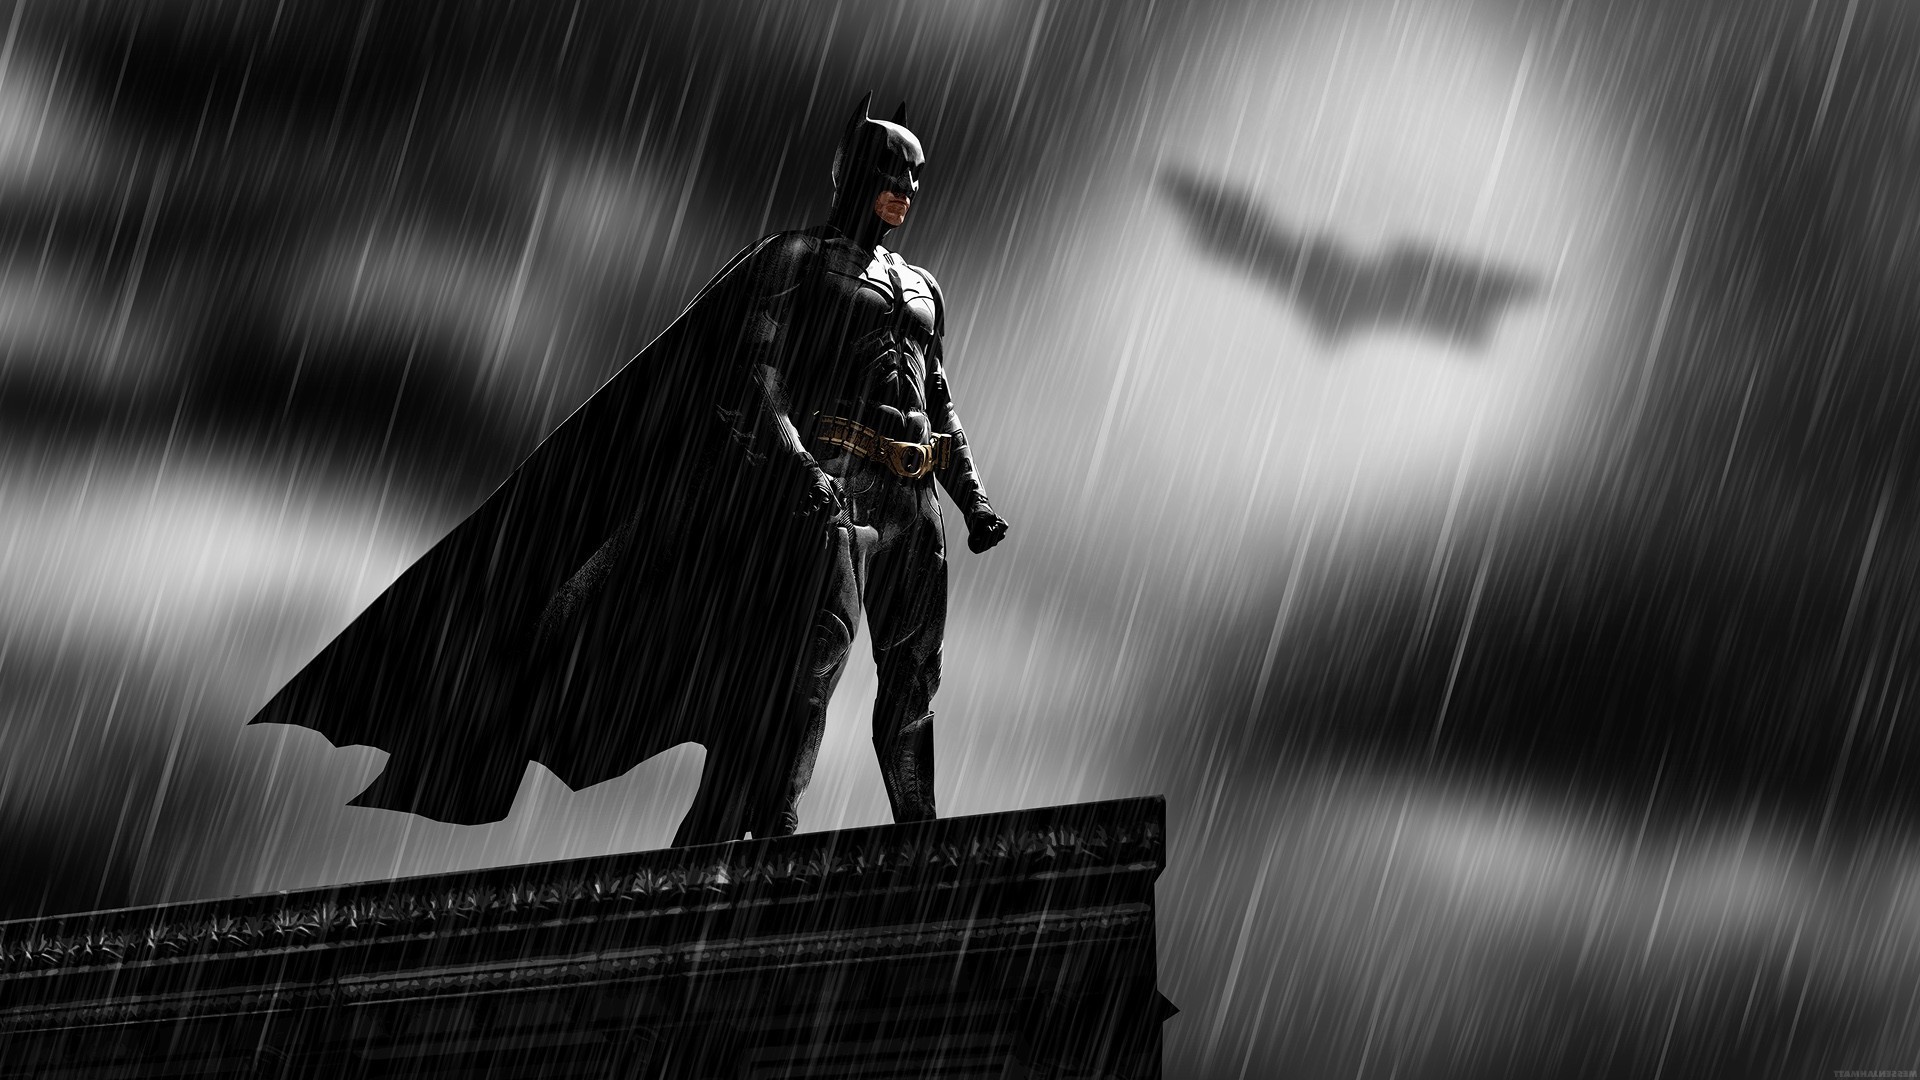 Batman, Rooftops, Rain, Bat Signal, MessenjahMatt, People Wallpapers HD / Desktop and Mobile Backgrounds